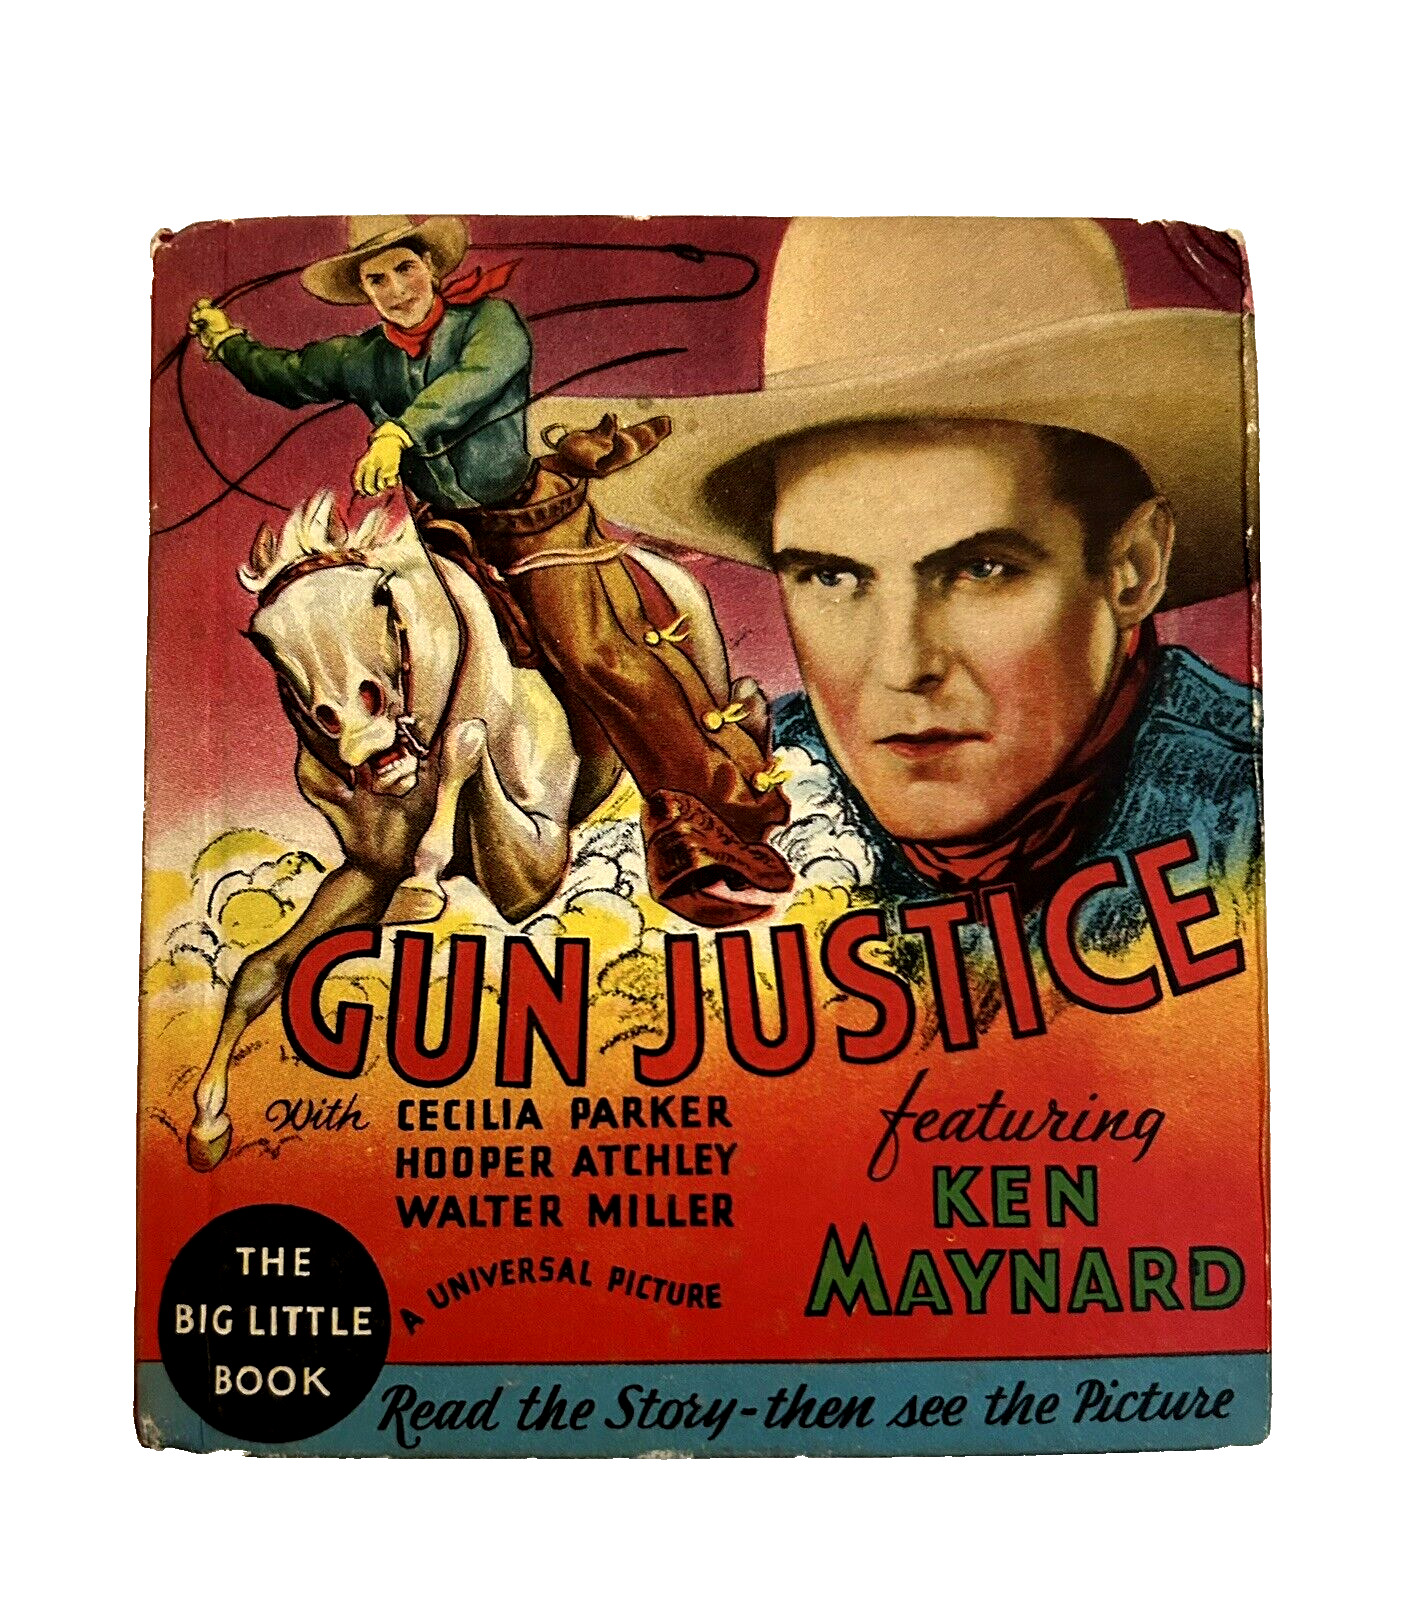 1934 Big Little Book - # 776 - Ken Maynard in GUN JUSTICE - Read the Story